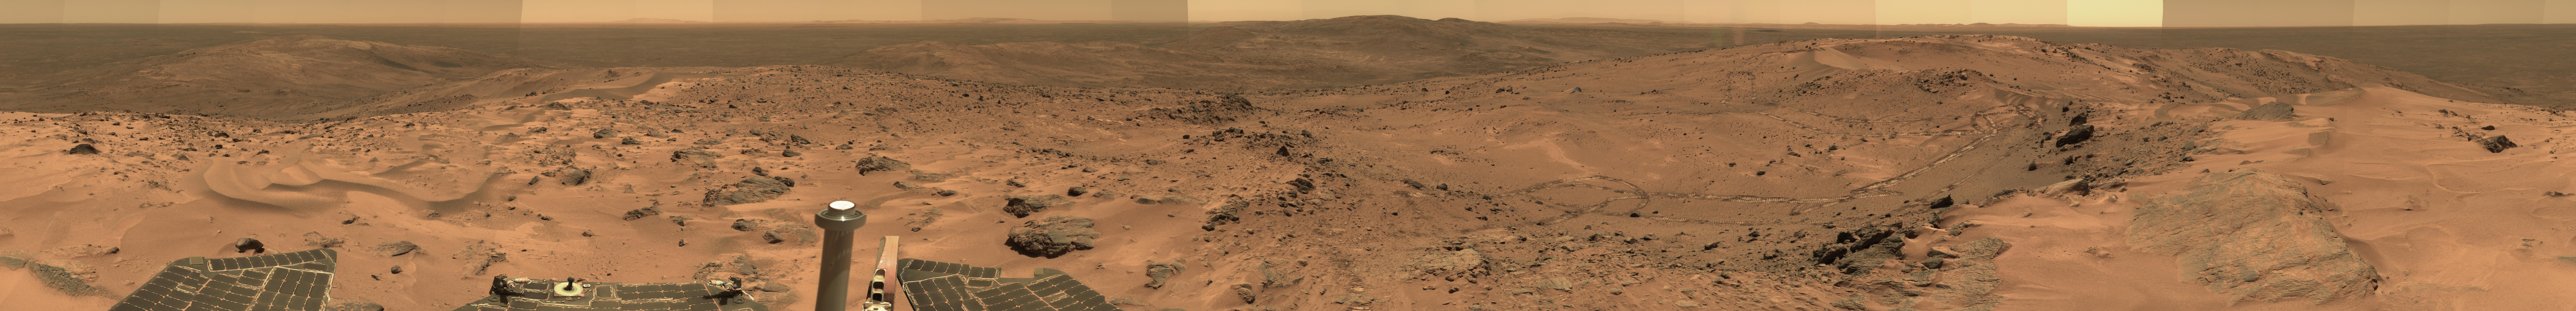 Mars Panorama Space Marsscape Digital Art 22348x2697